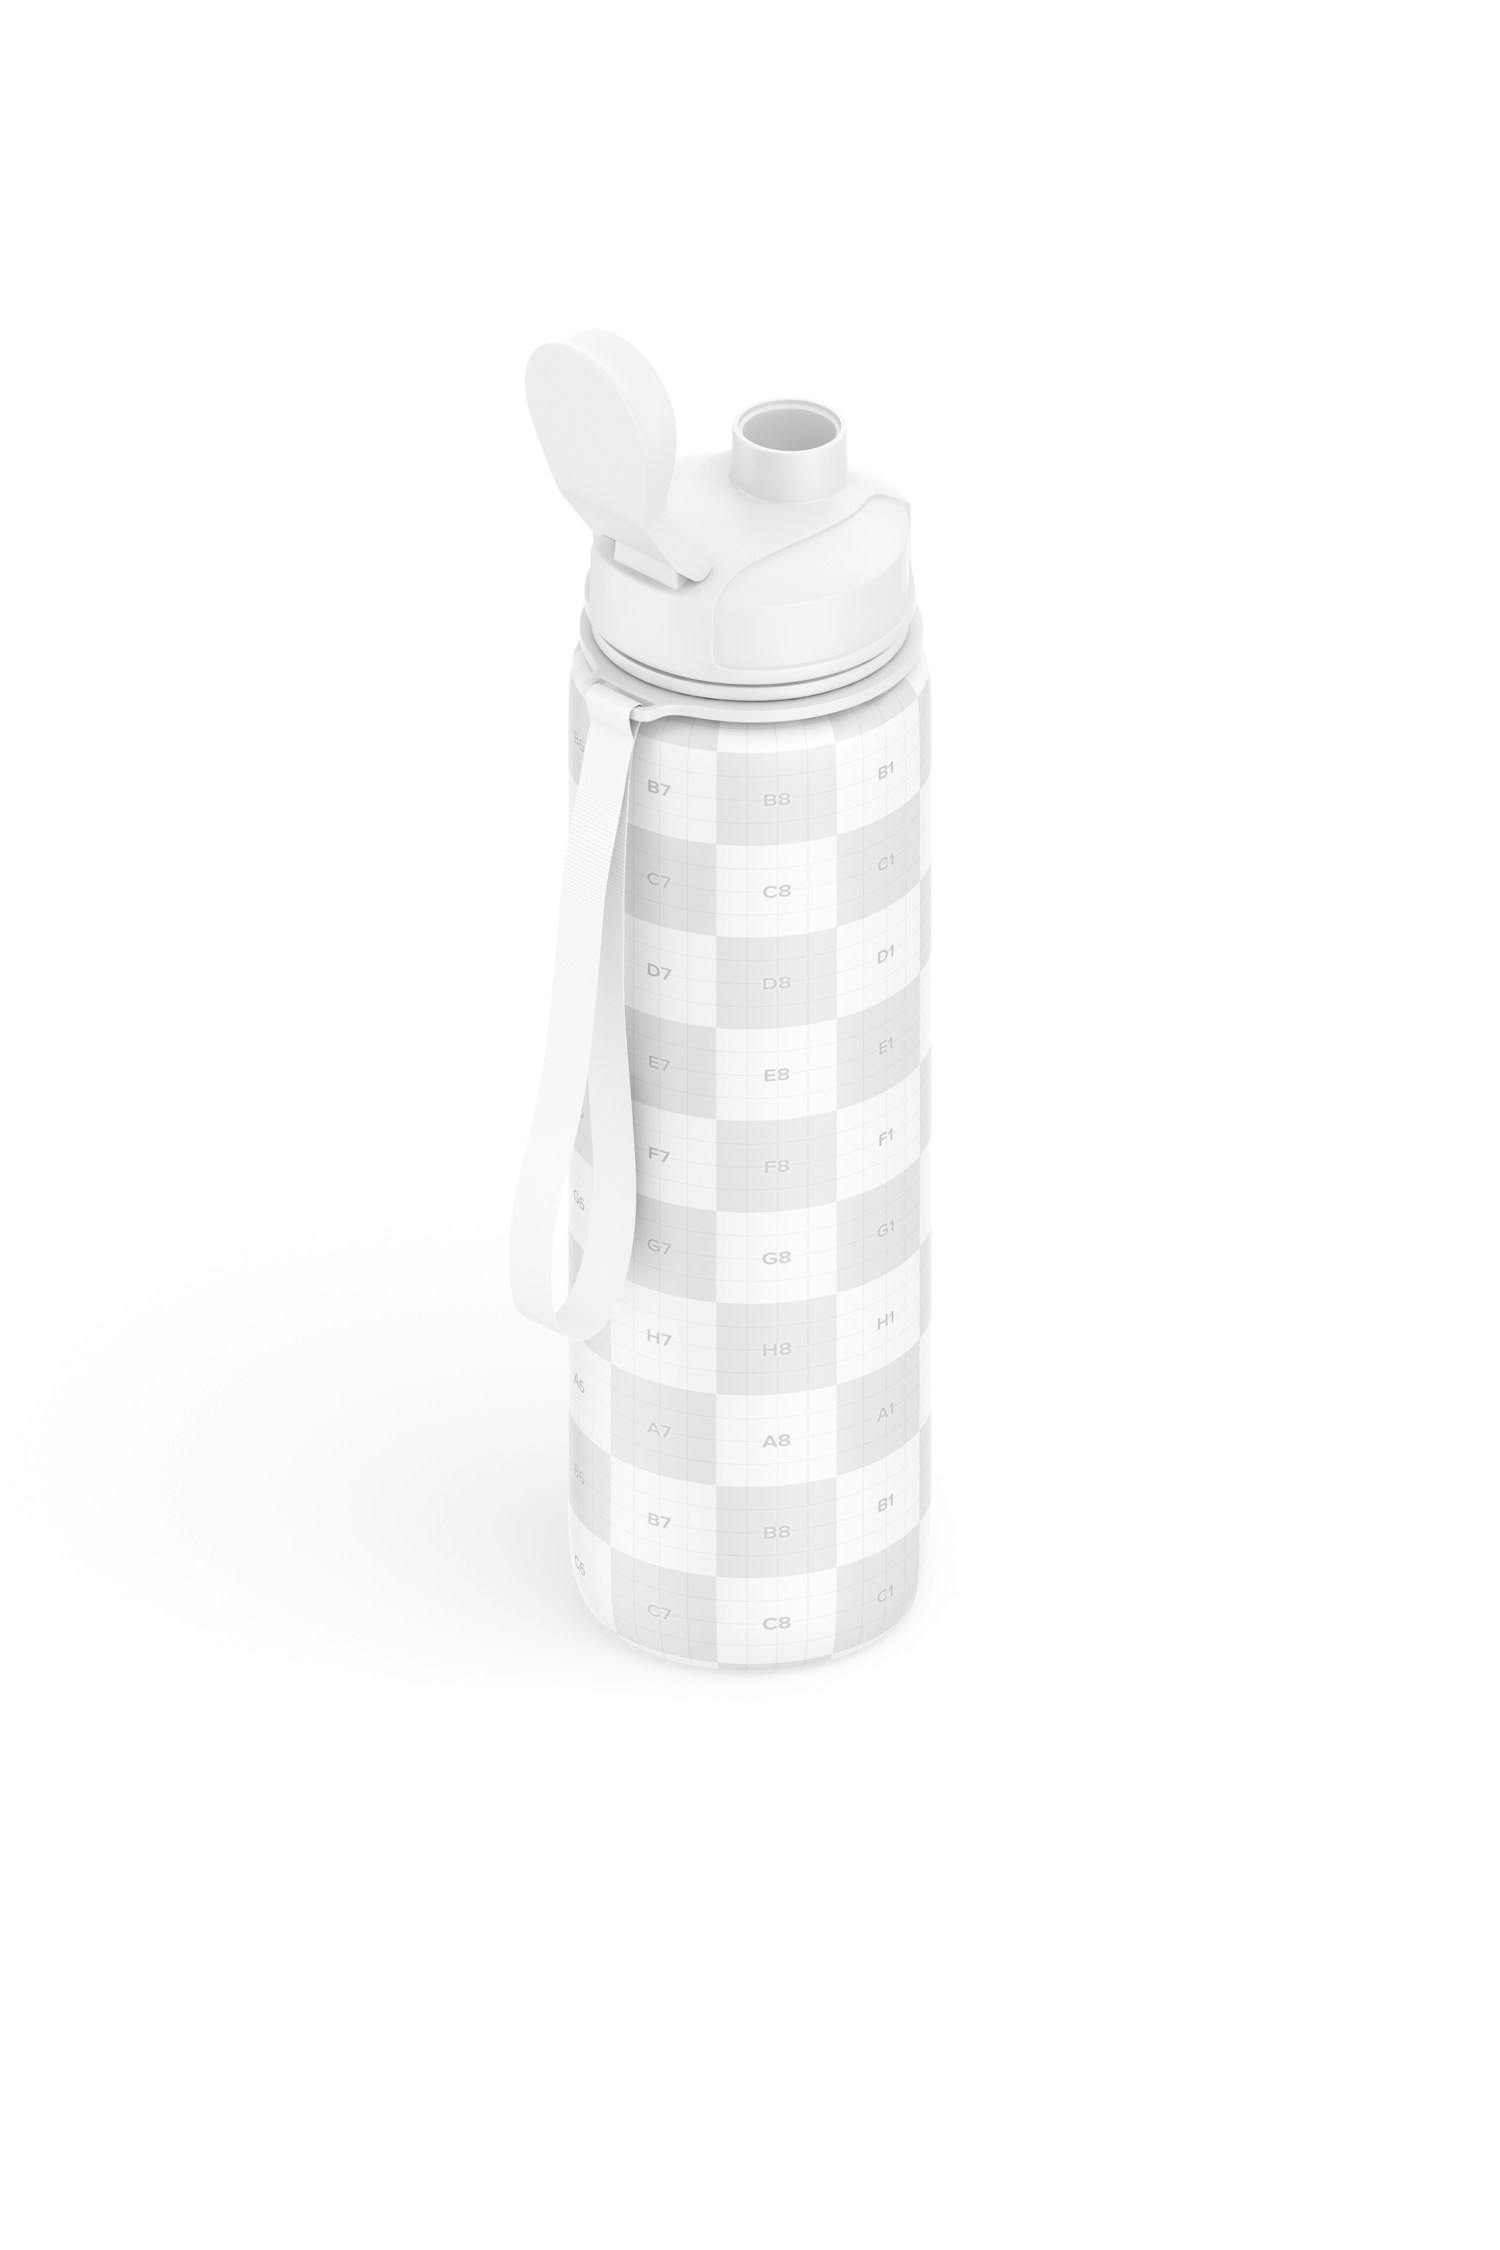 32 oz Water Bottle Mockup, Isometric View